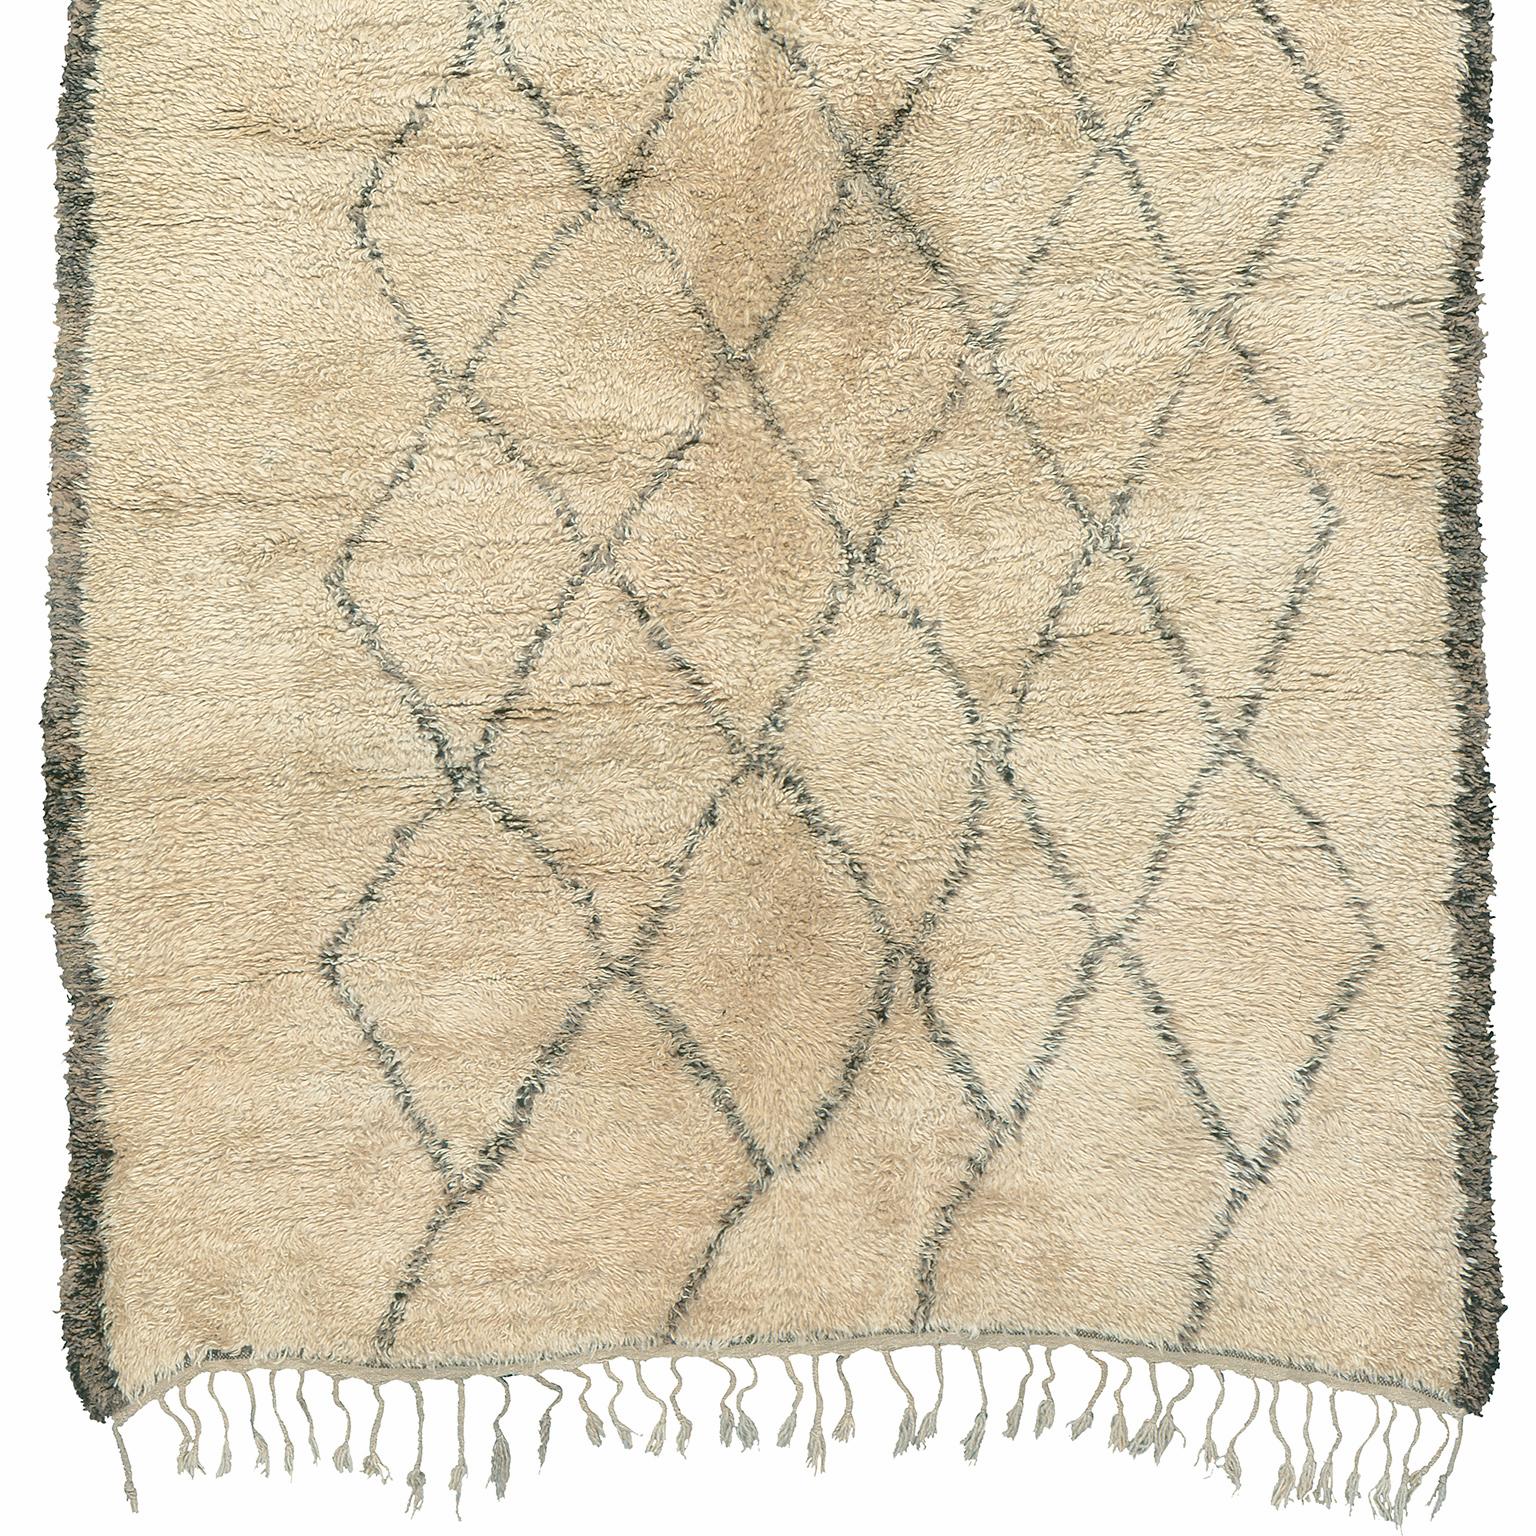 Moroccan Berber carpet
Morocco, mid-20th Century
Handwoven.
  